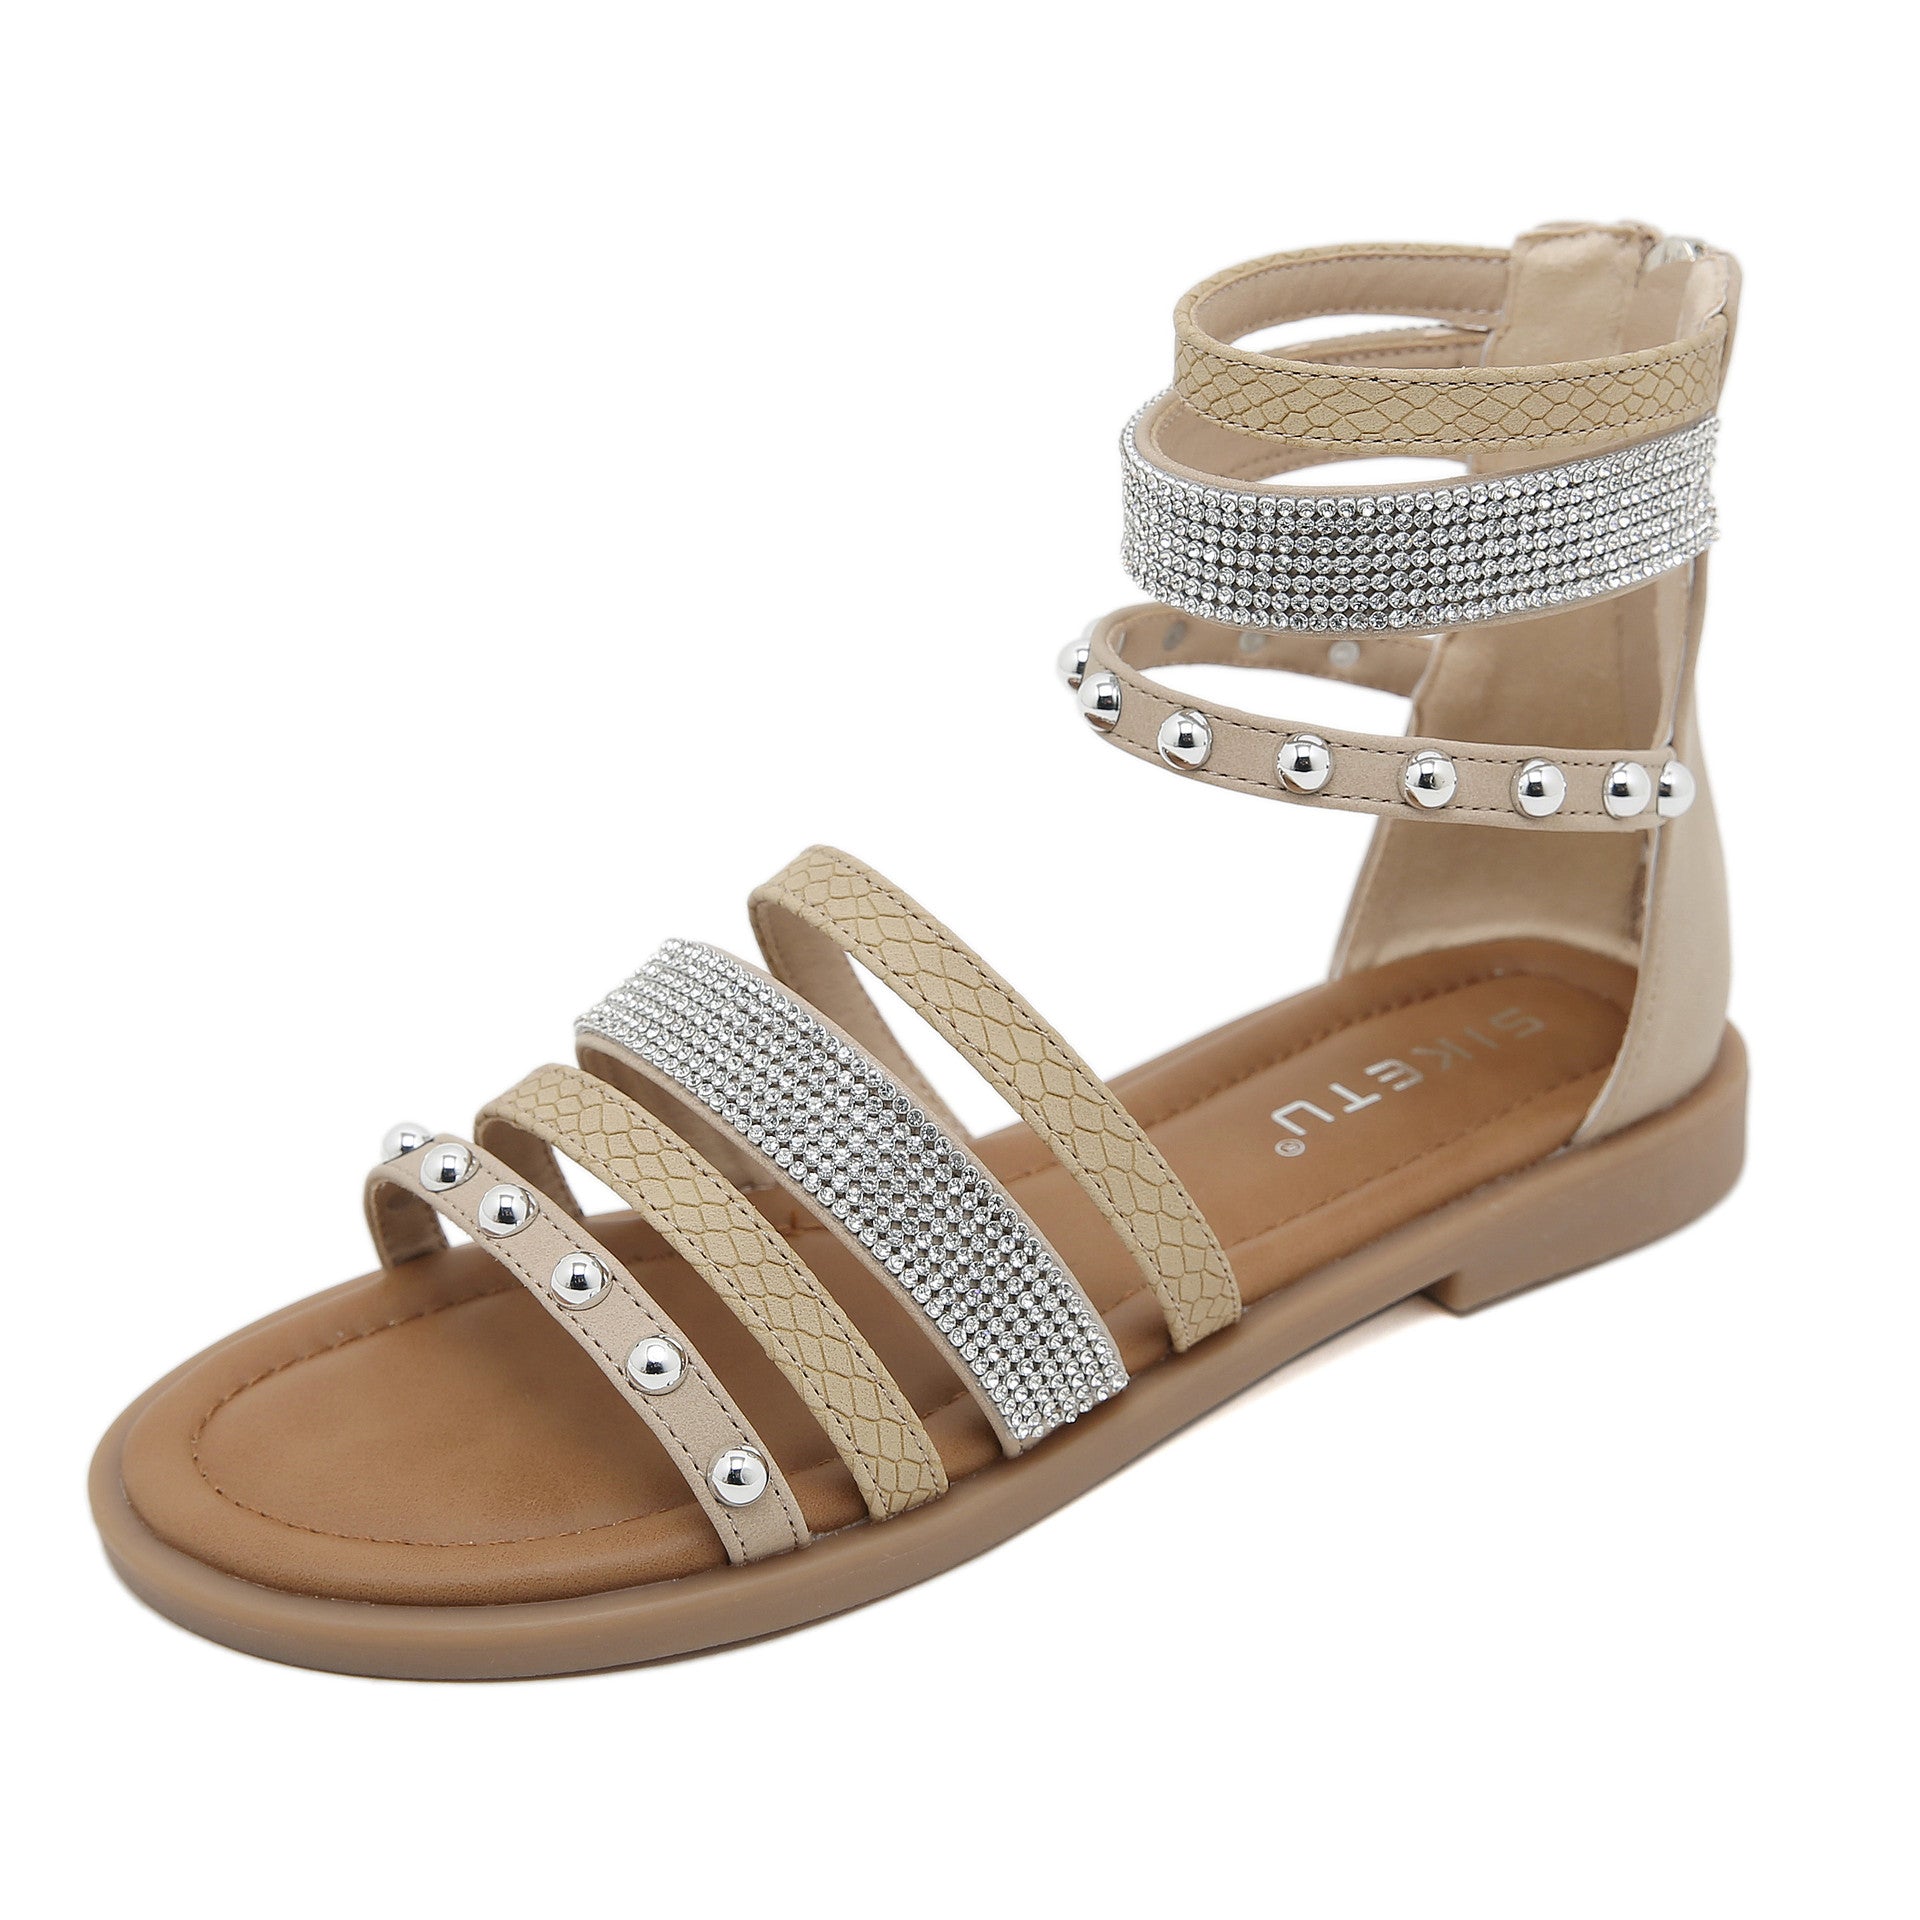 Owlkay Fashion Comfortable Roman Sandals